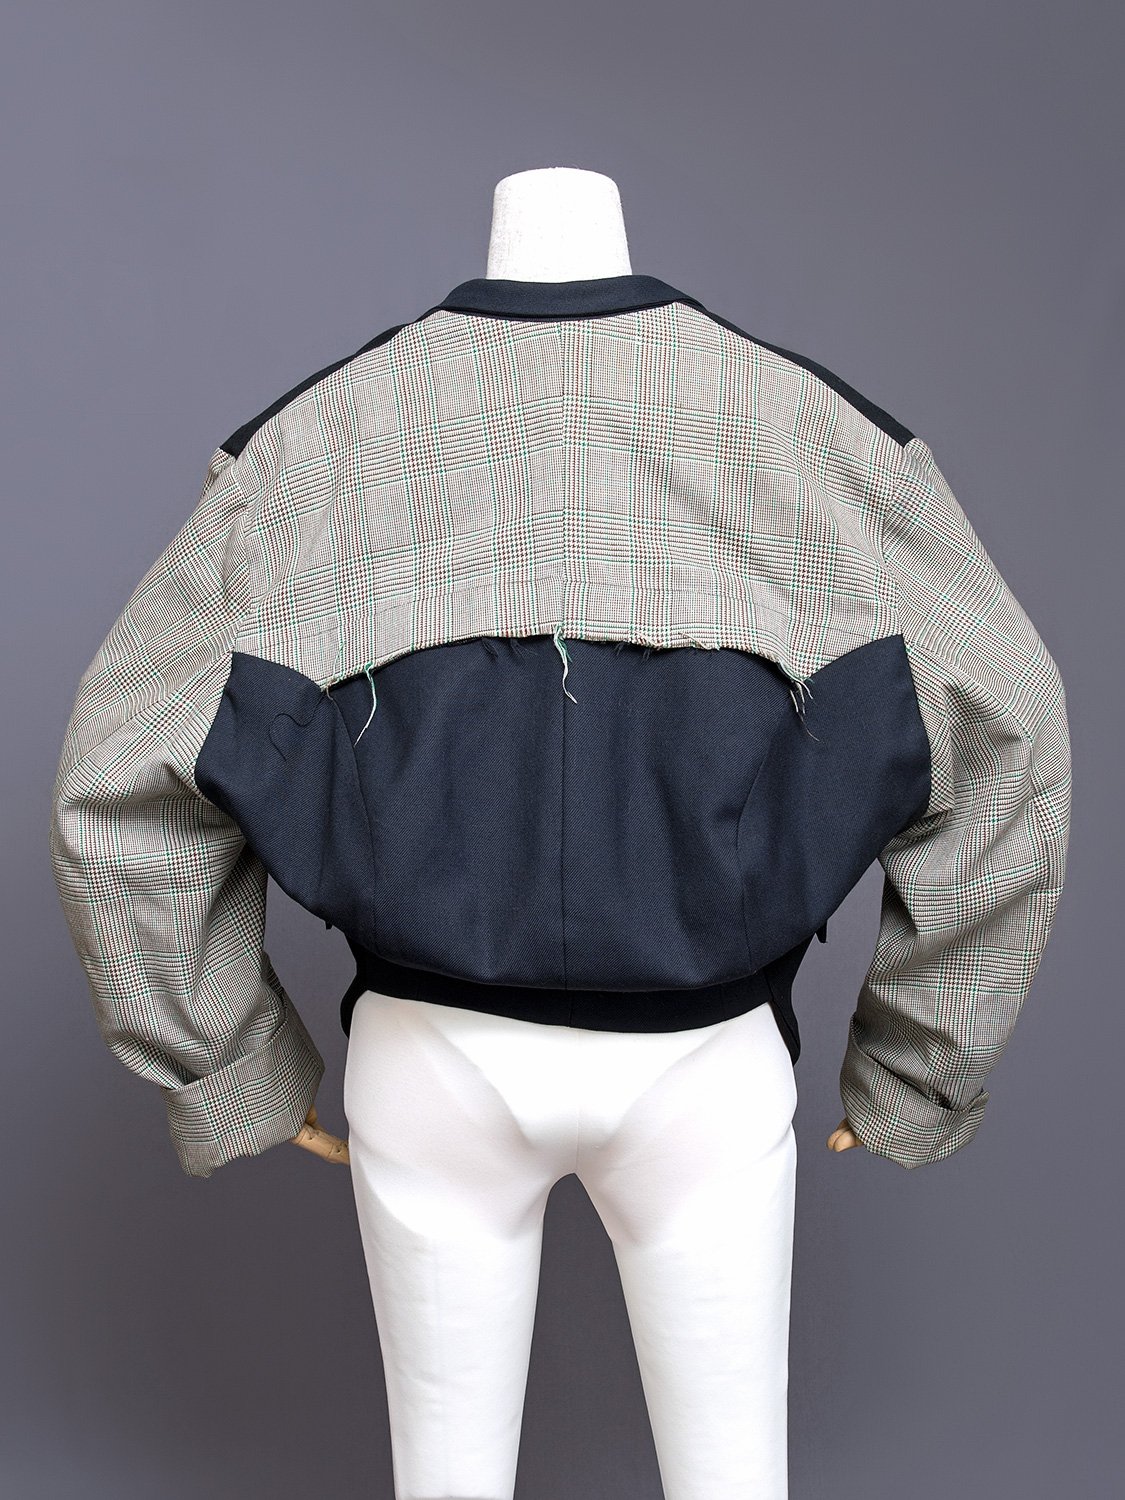 Christopher Nemeth Jacket, Early 1980s | Japanese Fashion Archive